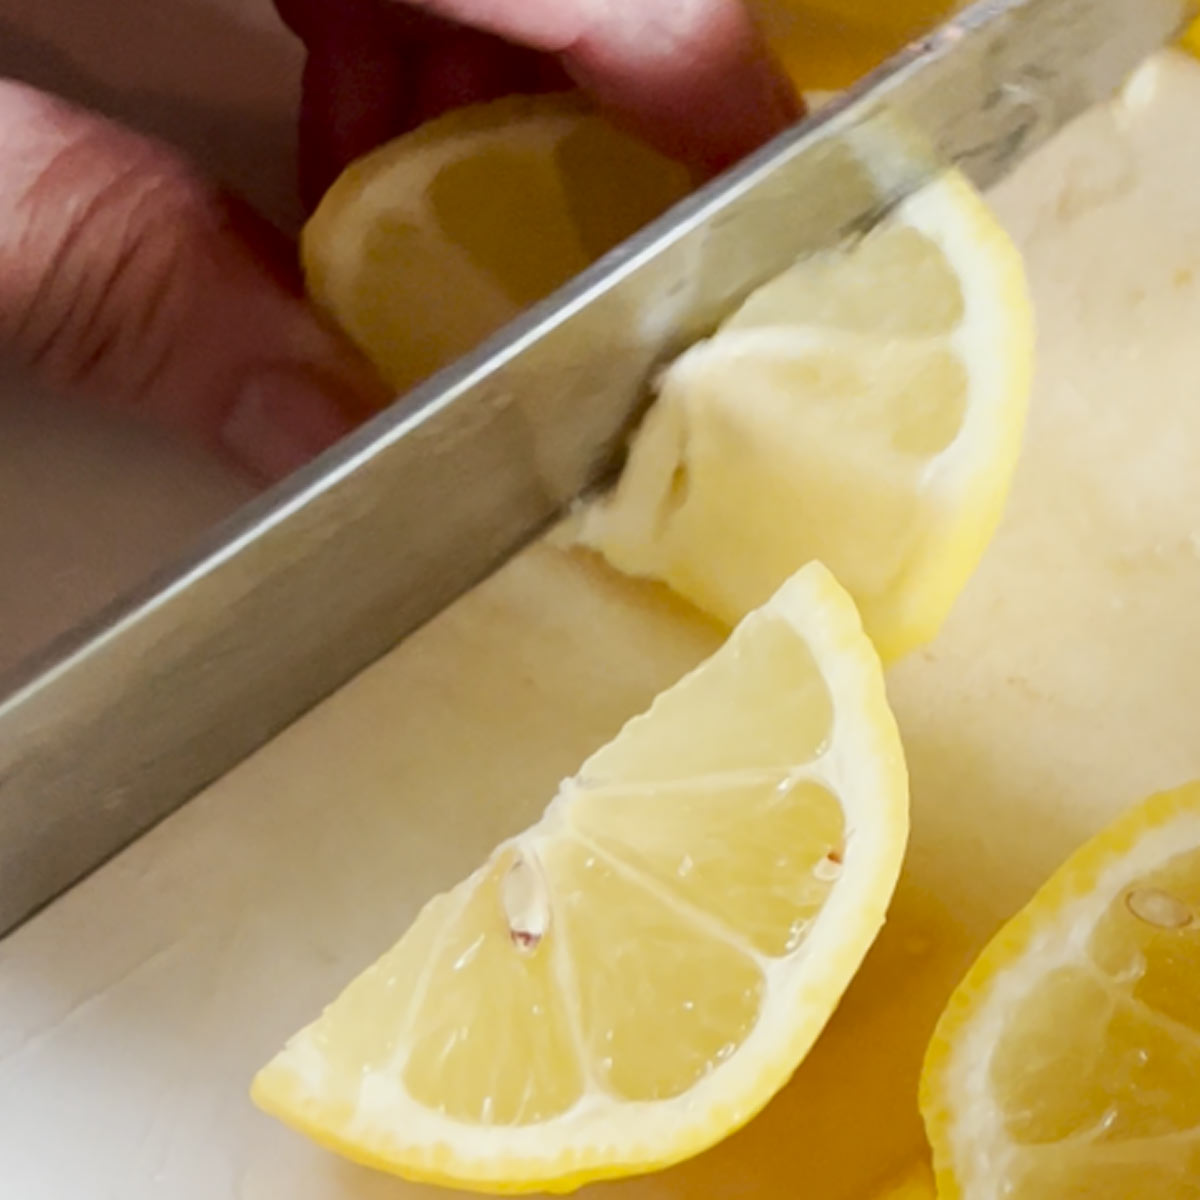 cut lemon into eights